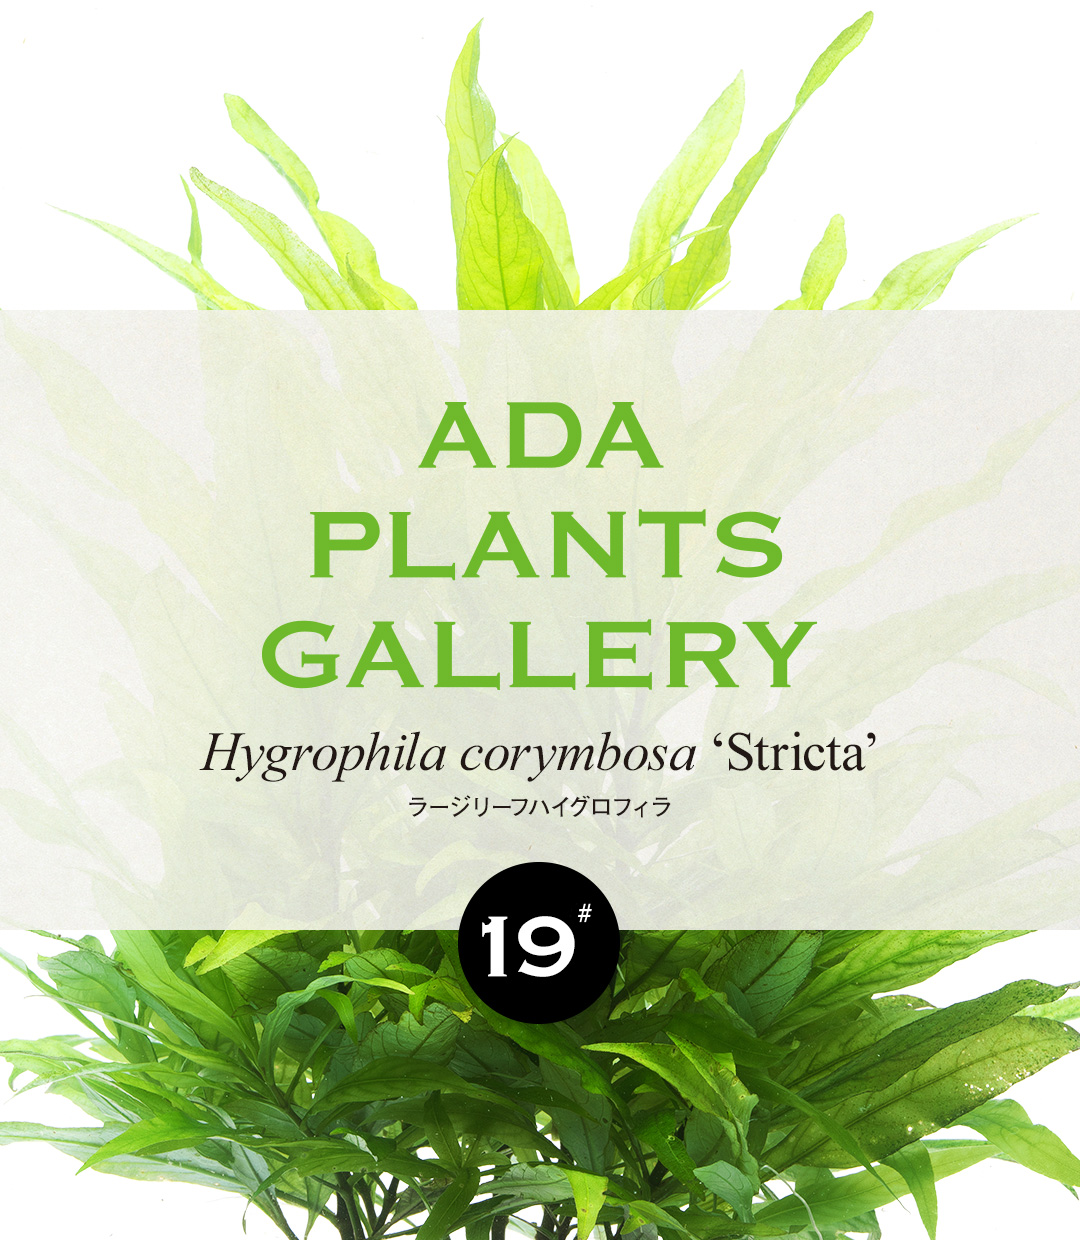 ADA PLANTS GALLERY #19 Hygrophila corymbosa ‘Stricta’